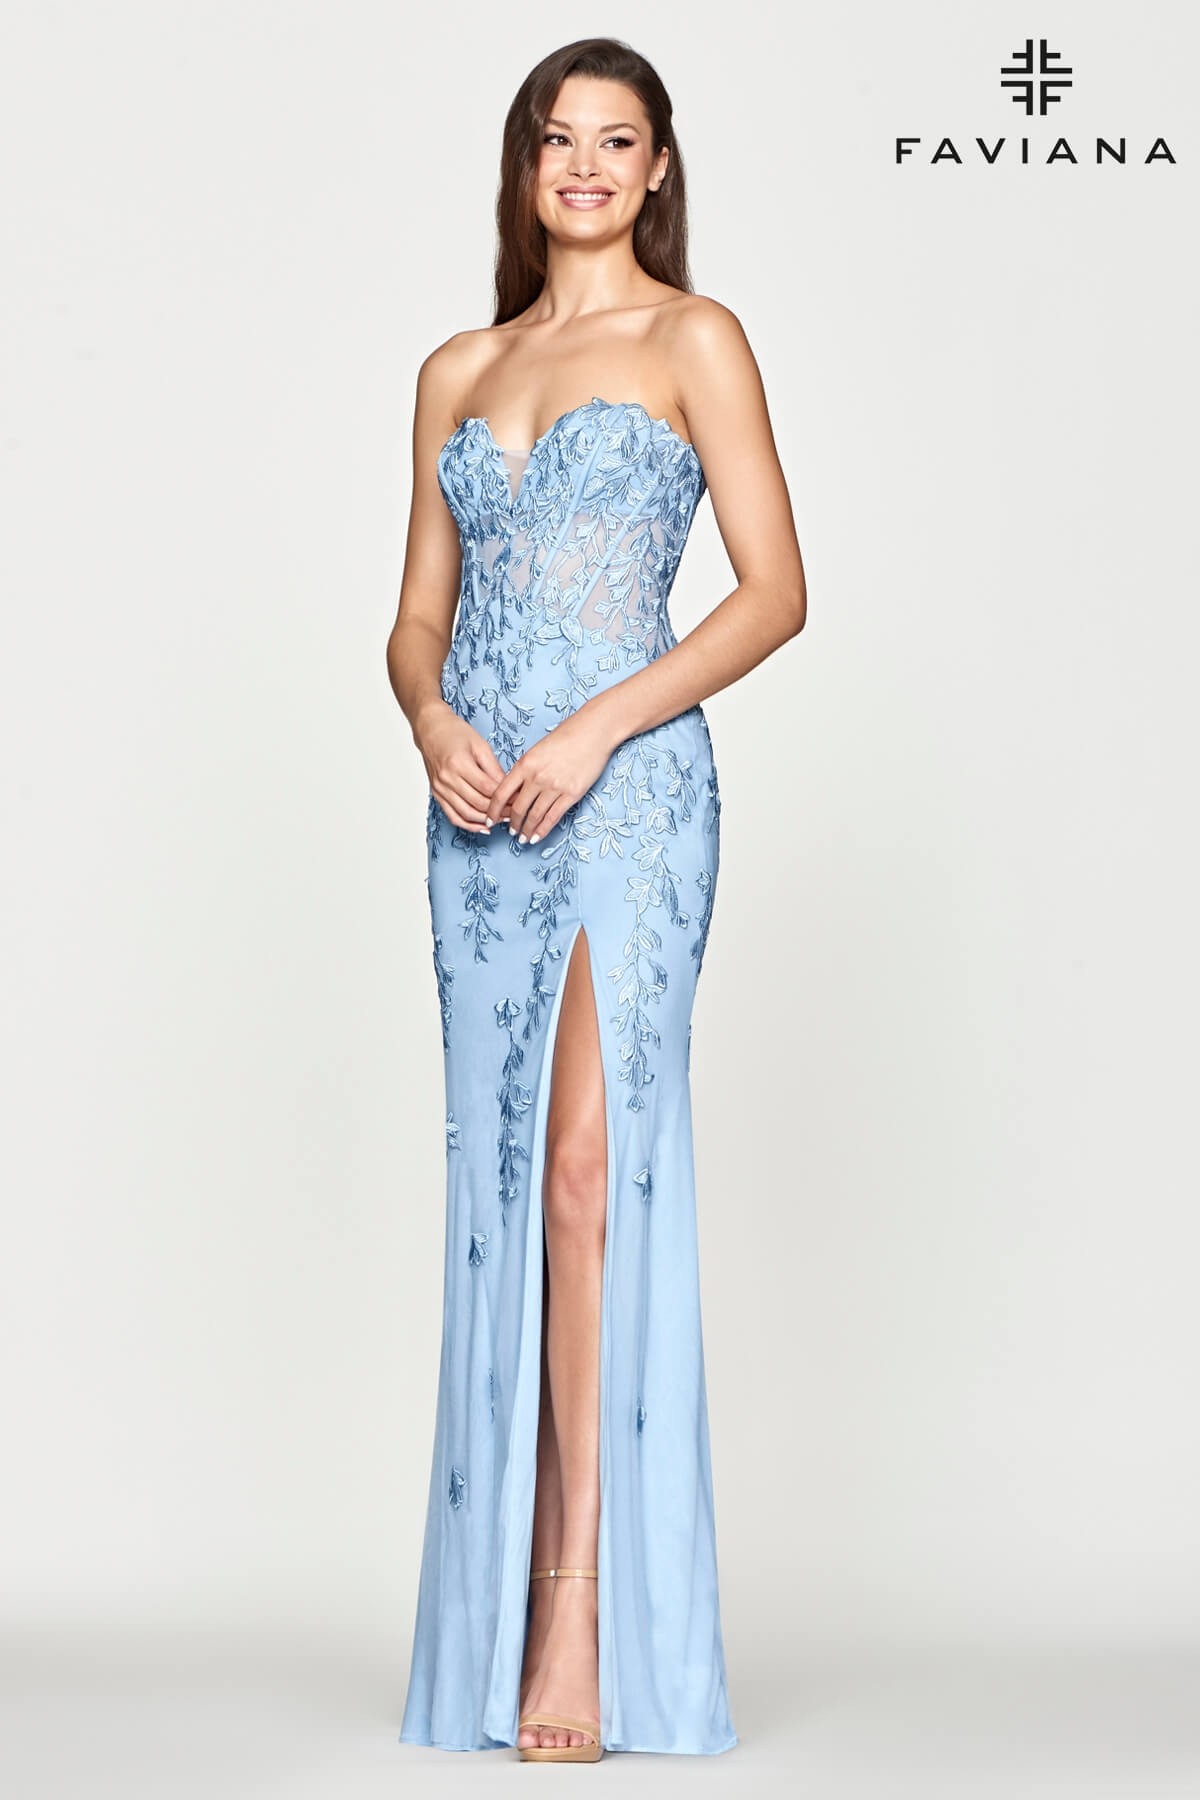 Faviana S10664 Prom Dress